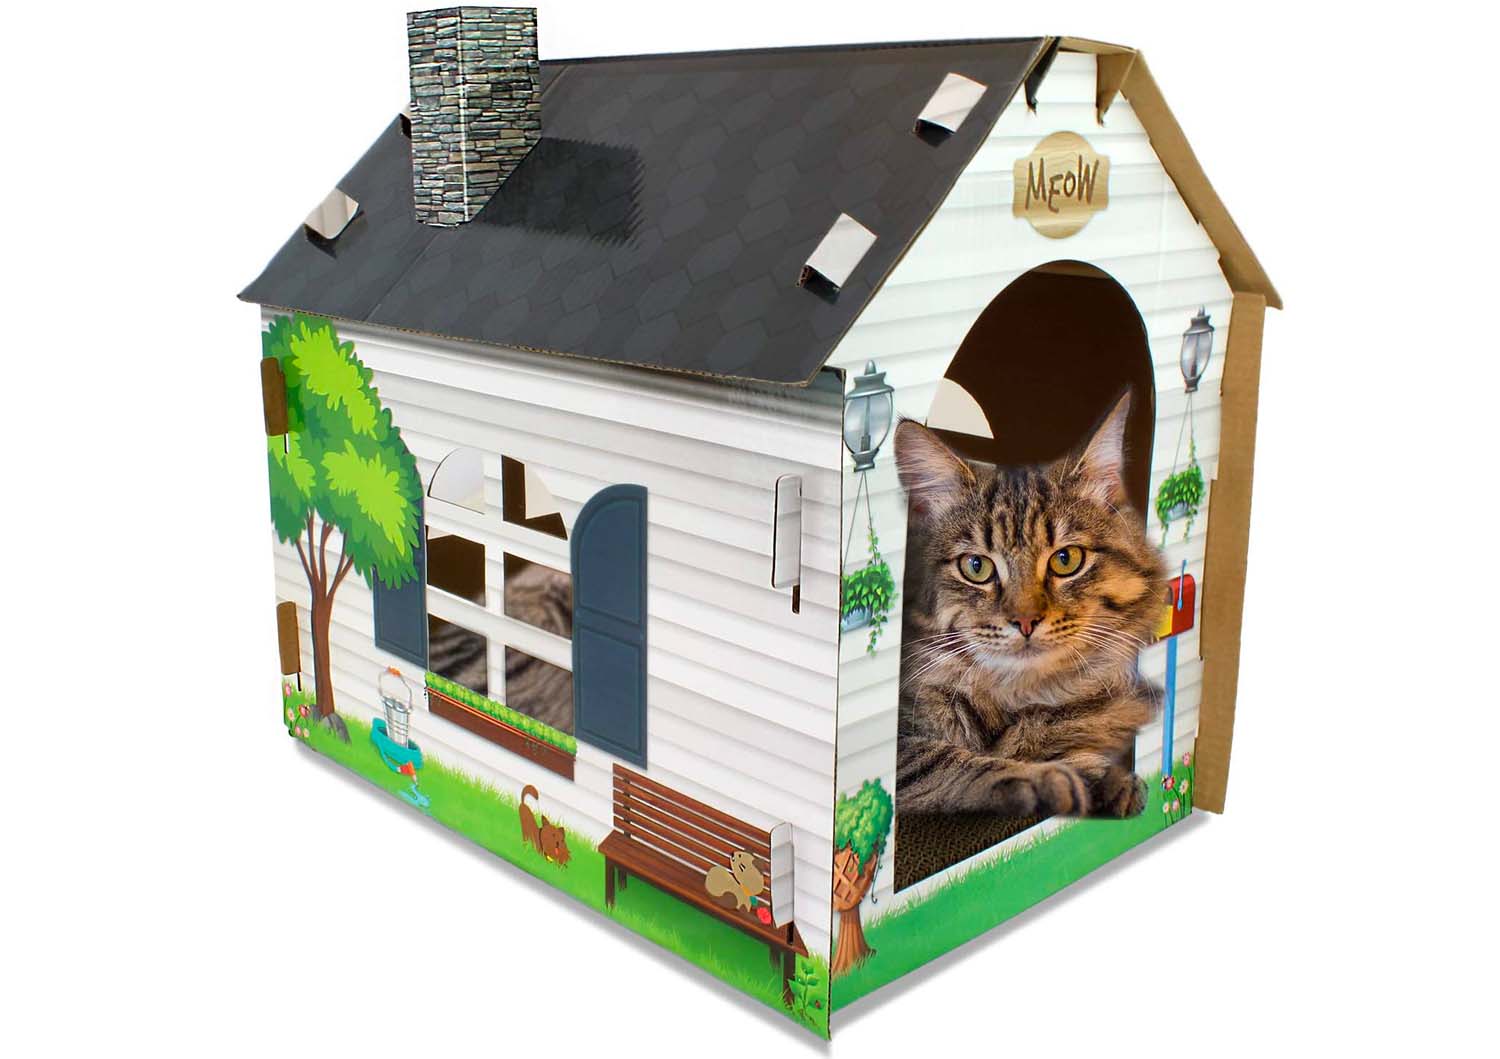 aspca cardboard cat house hideaway playhouse